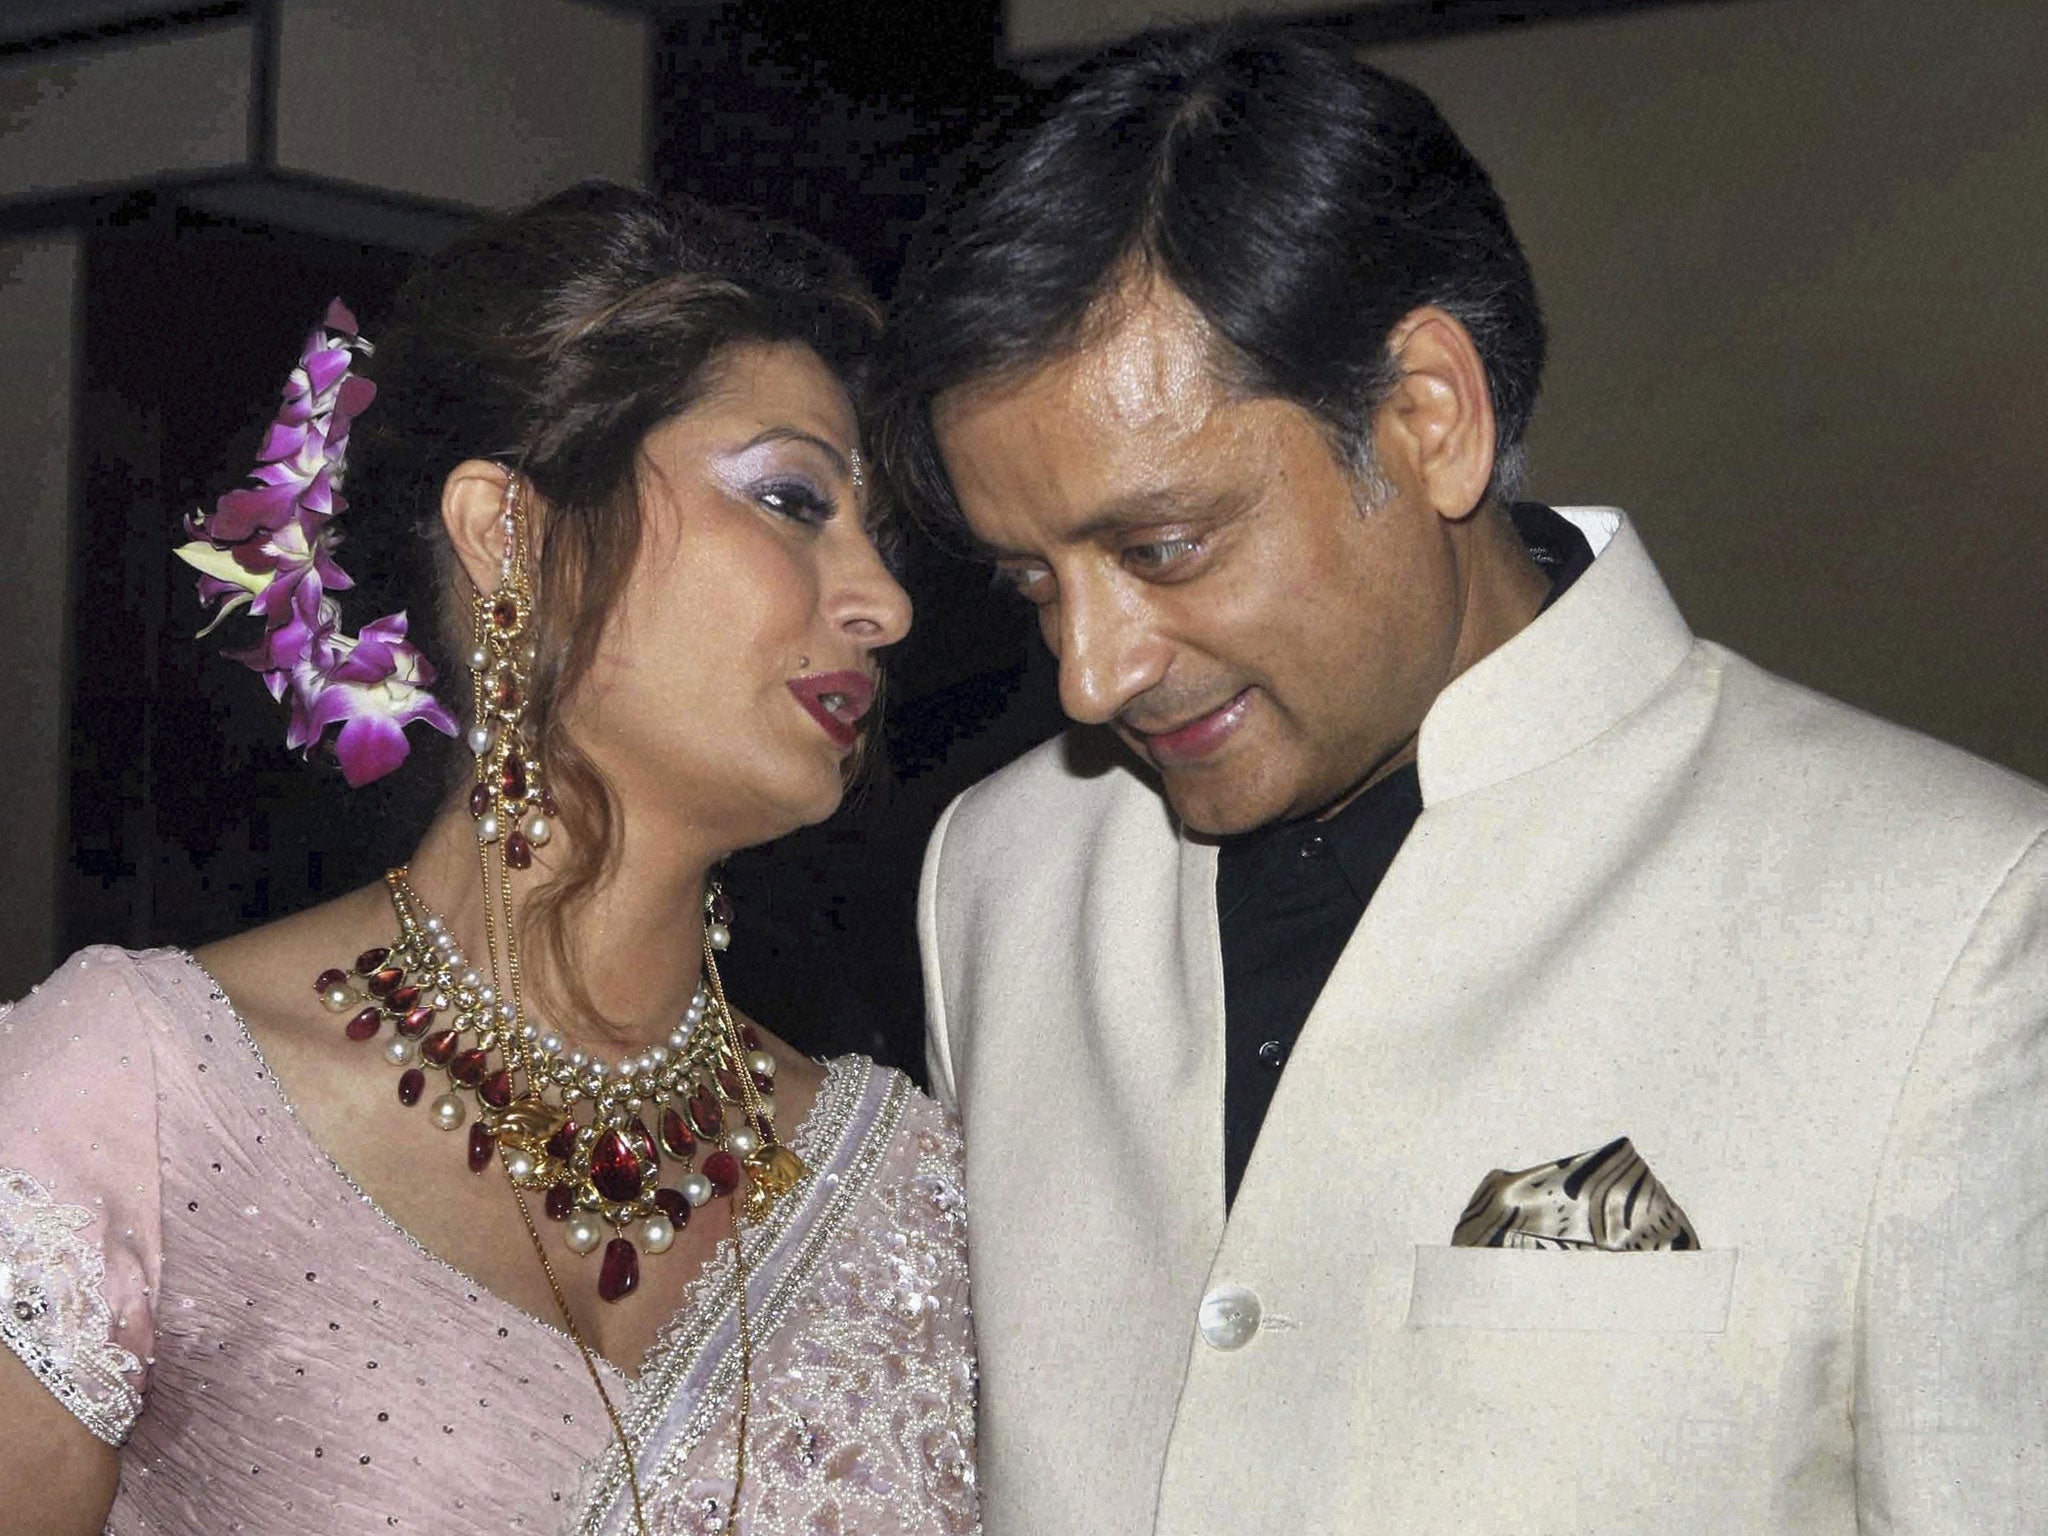 Shashi Tharoor and his wife Sunanda Pushkar at their wedding reception in New Delhi in 2010 (AP)